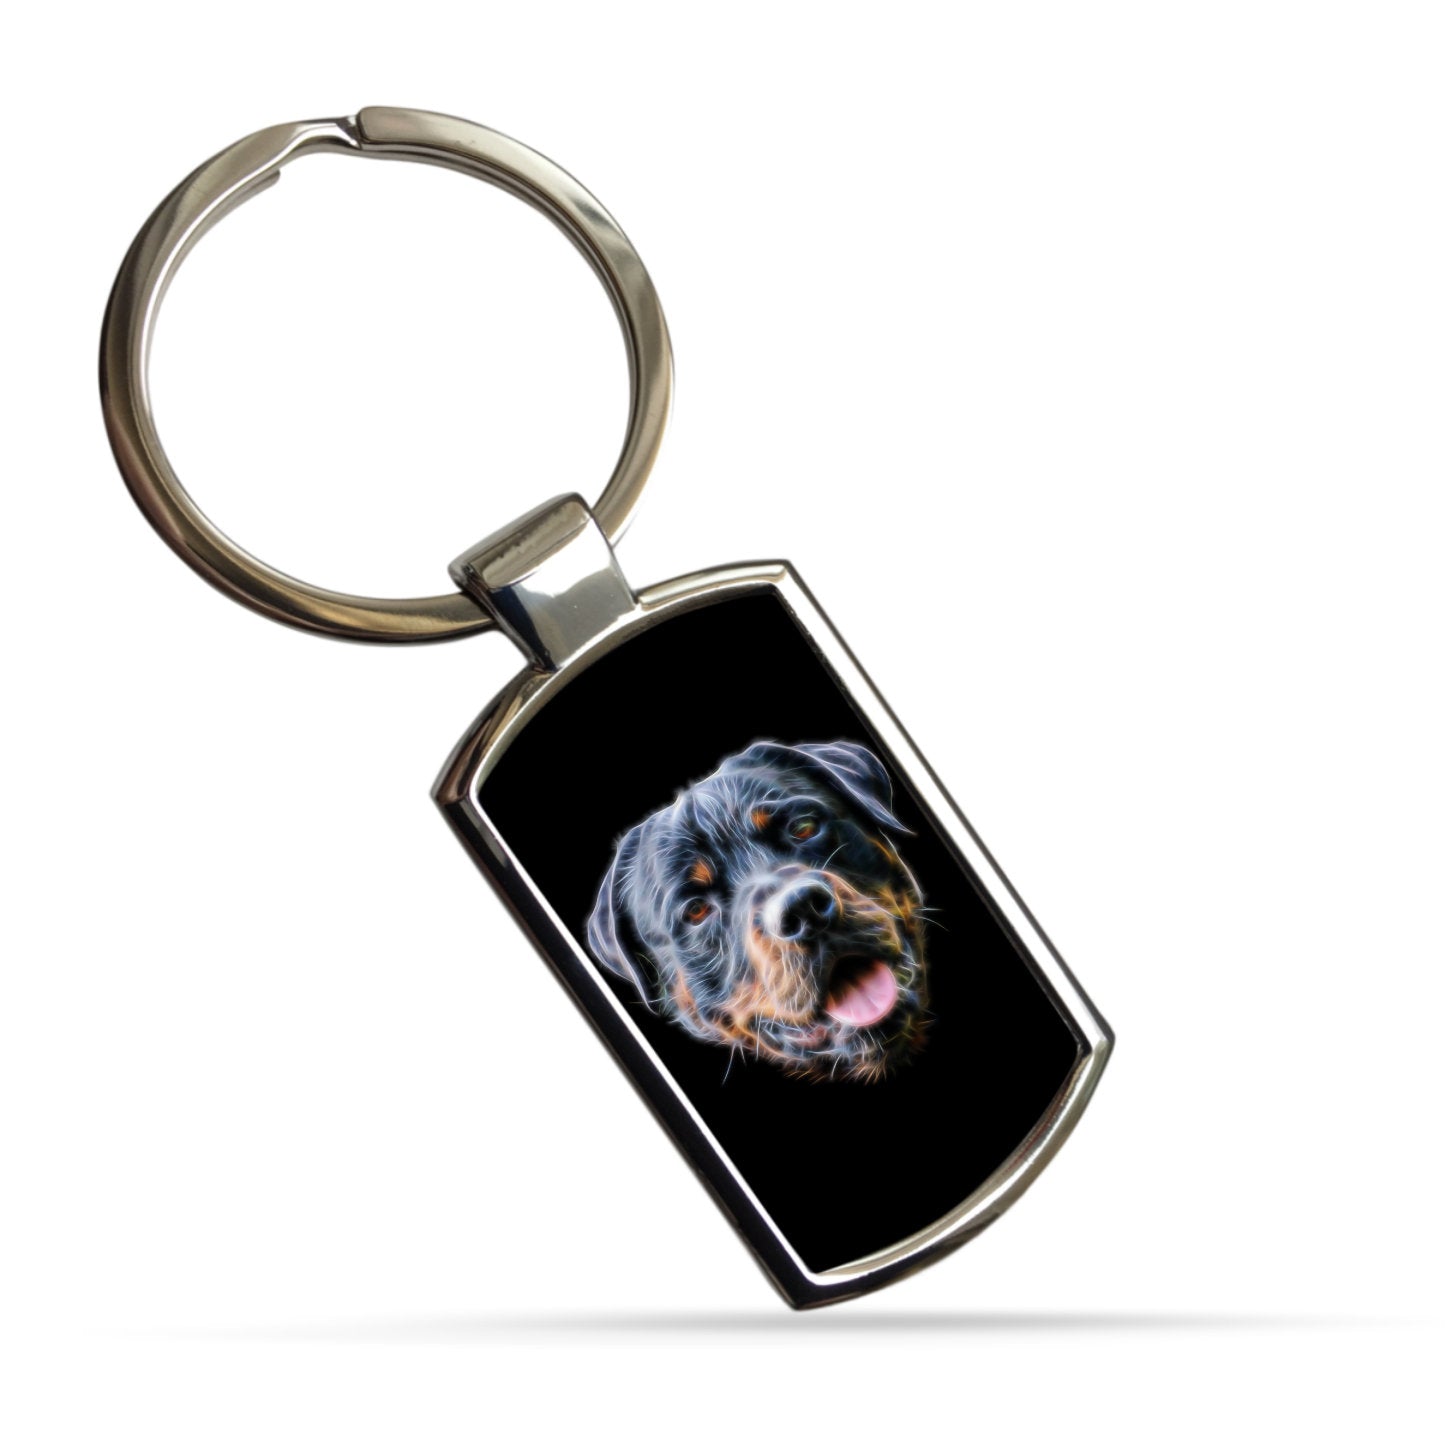 Rottweiler Dog Keychain with Stunning Fractal Art Design